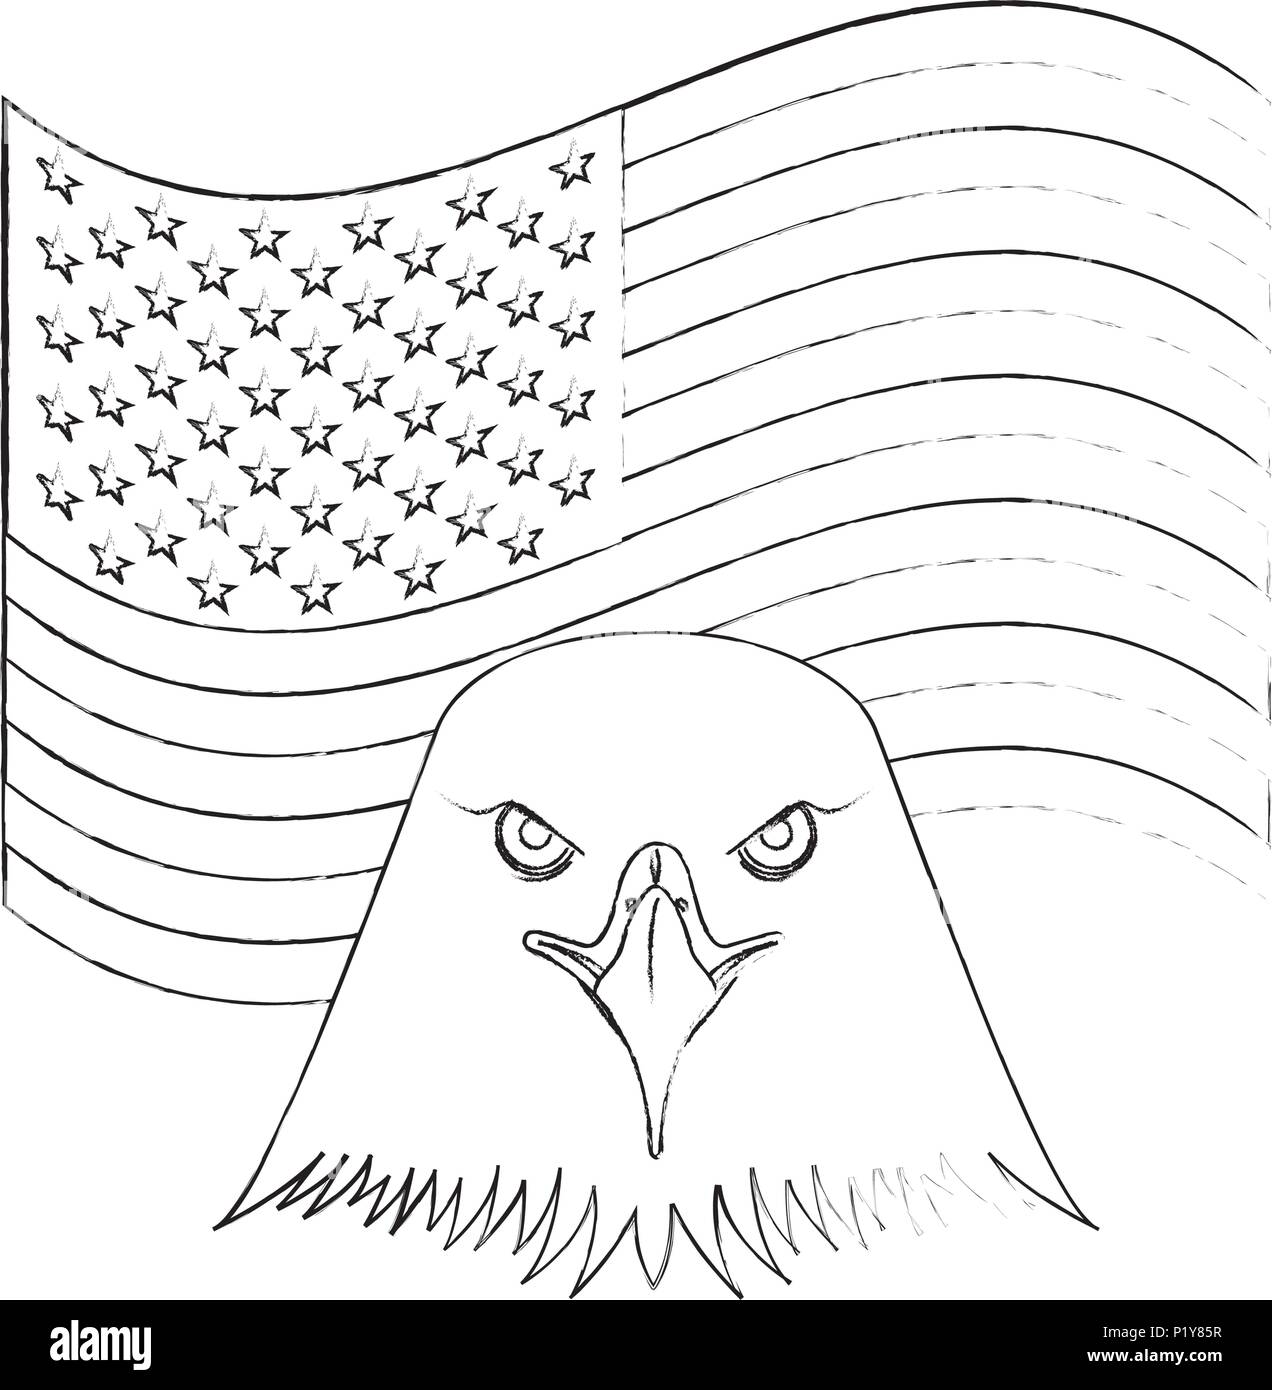 american head eagle flag national emblem vector illustration sketch Stock Vector